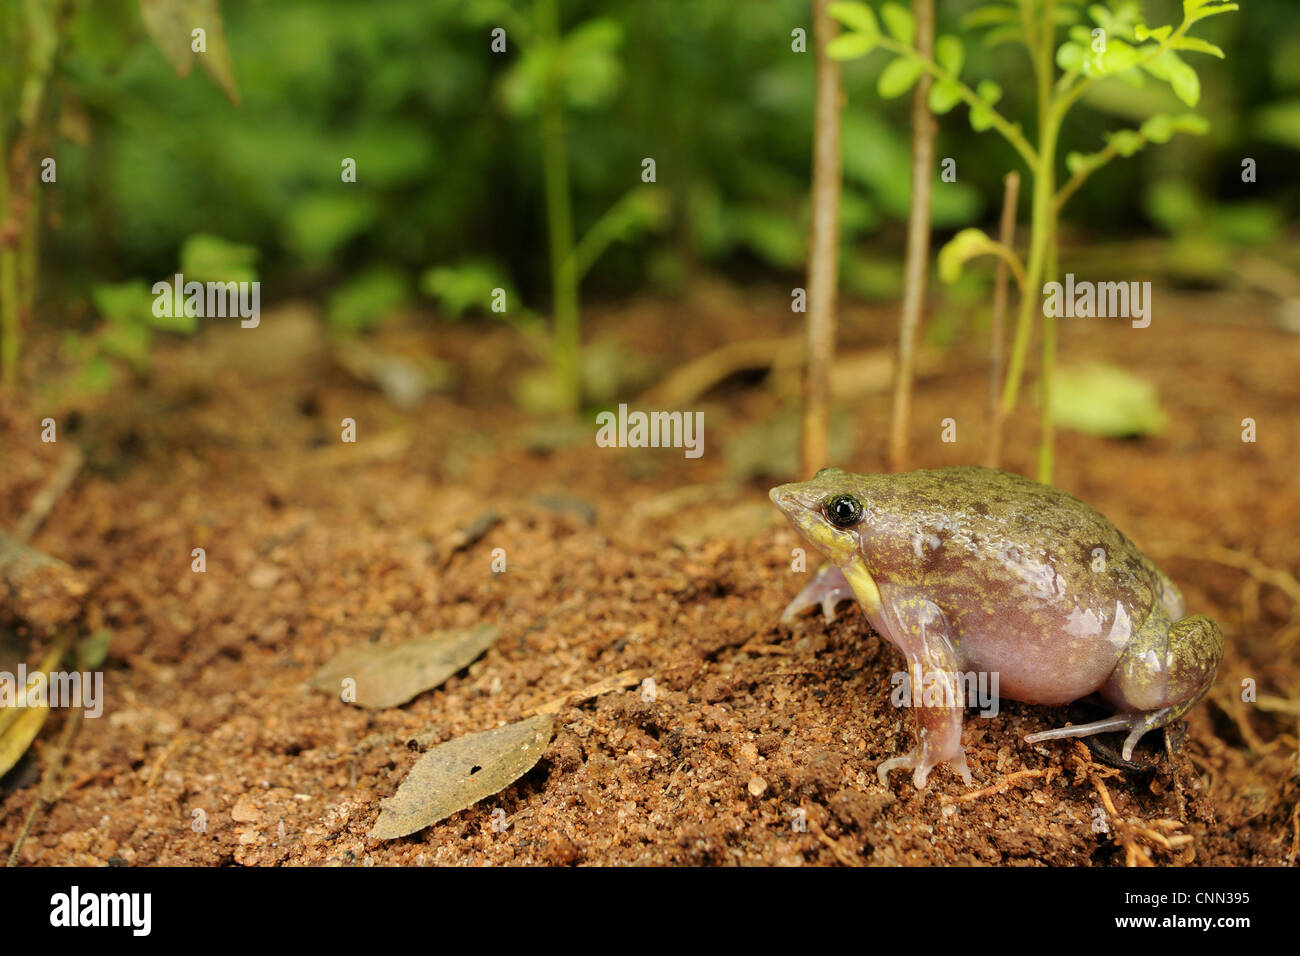 Mottled Shovel-nosed Frog (Hemisus marmoratus) adult, sitting on soil, Tanzania Stock Photo